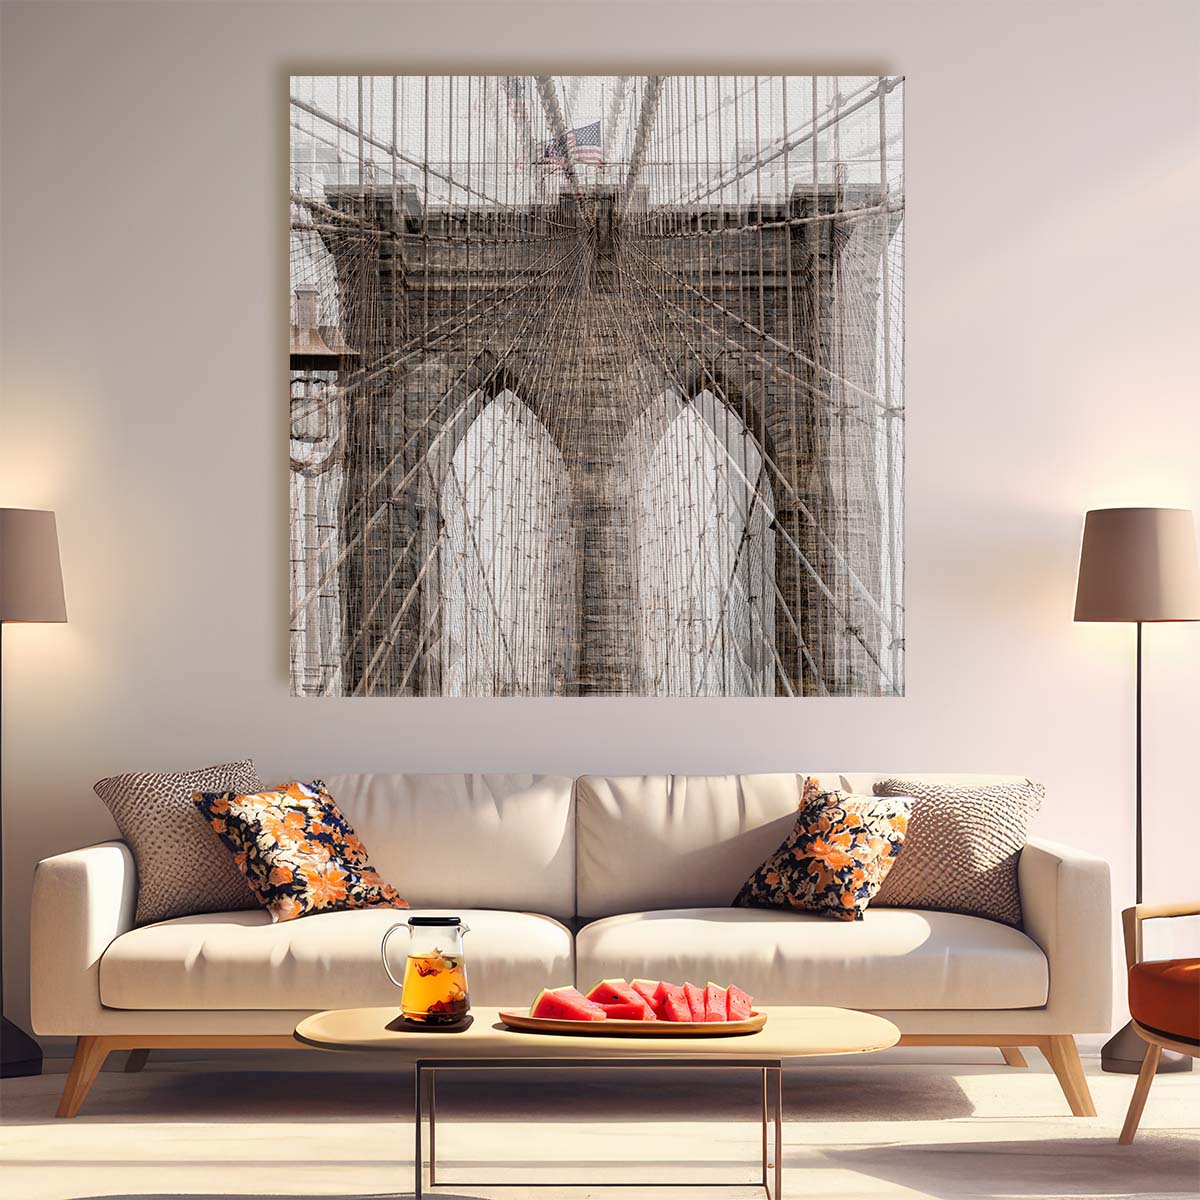 Iconic Brooklyn Bridge NYC USA Landmark Photography Wall Art by Luxuriance Designs. Made in USA.